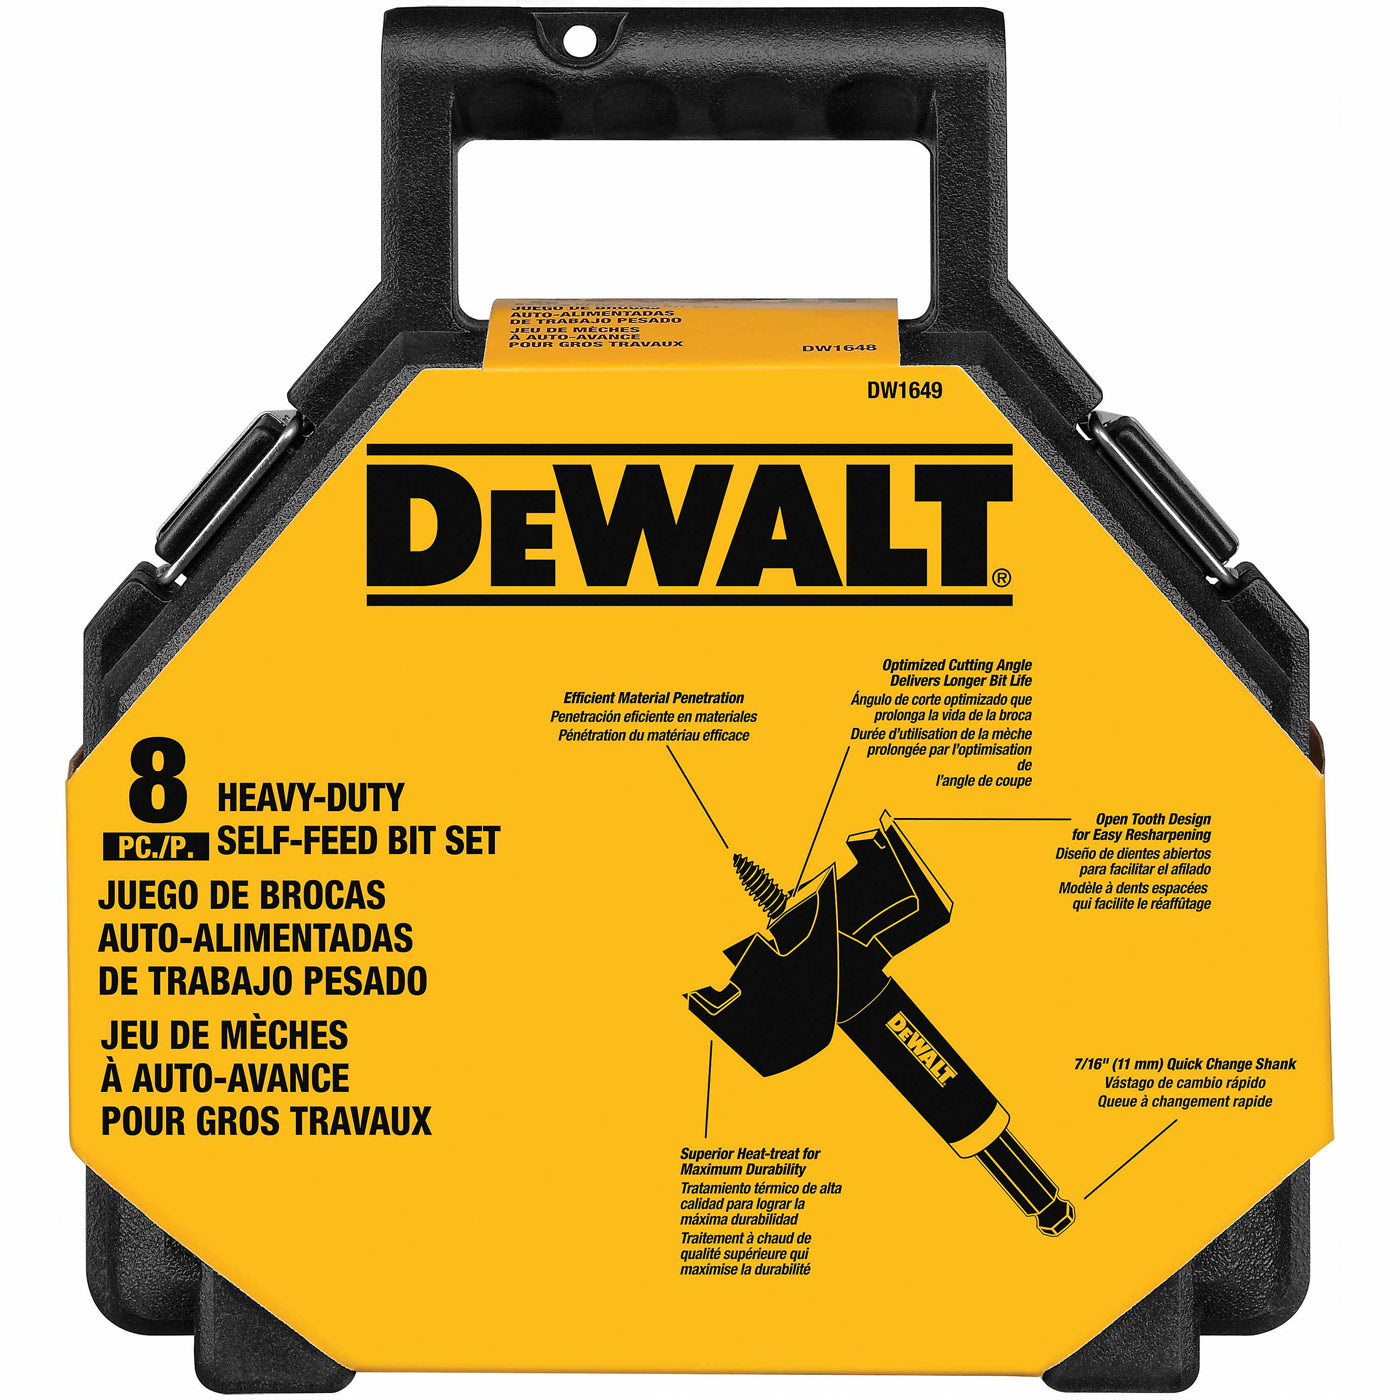 DeWalt DW1649 7/16" Shank Self-Feeded Bit Kit